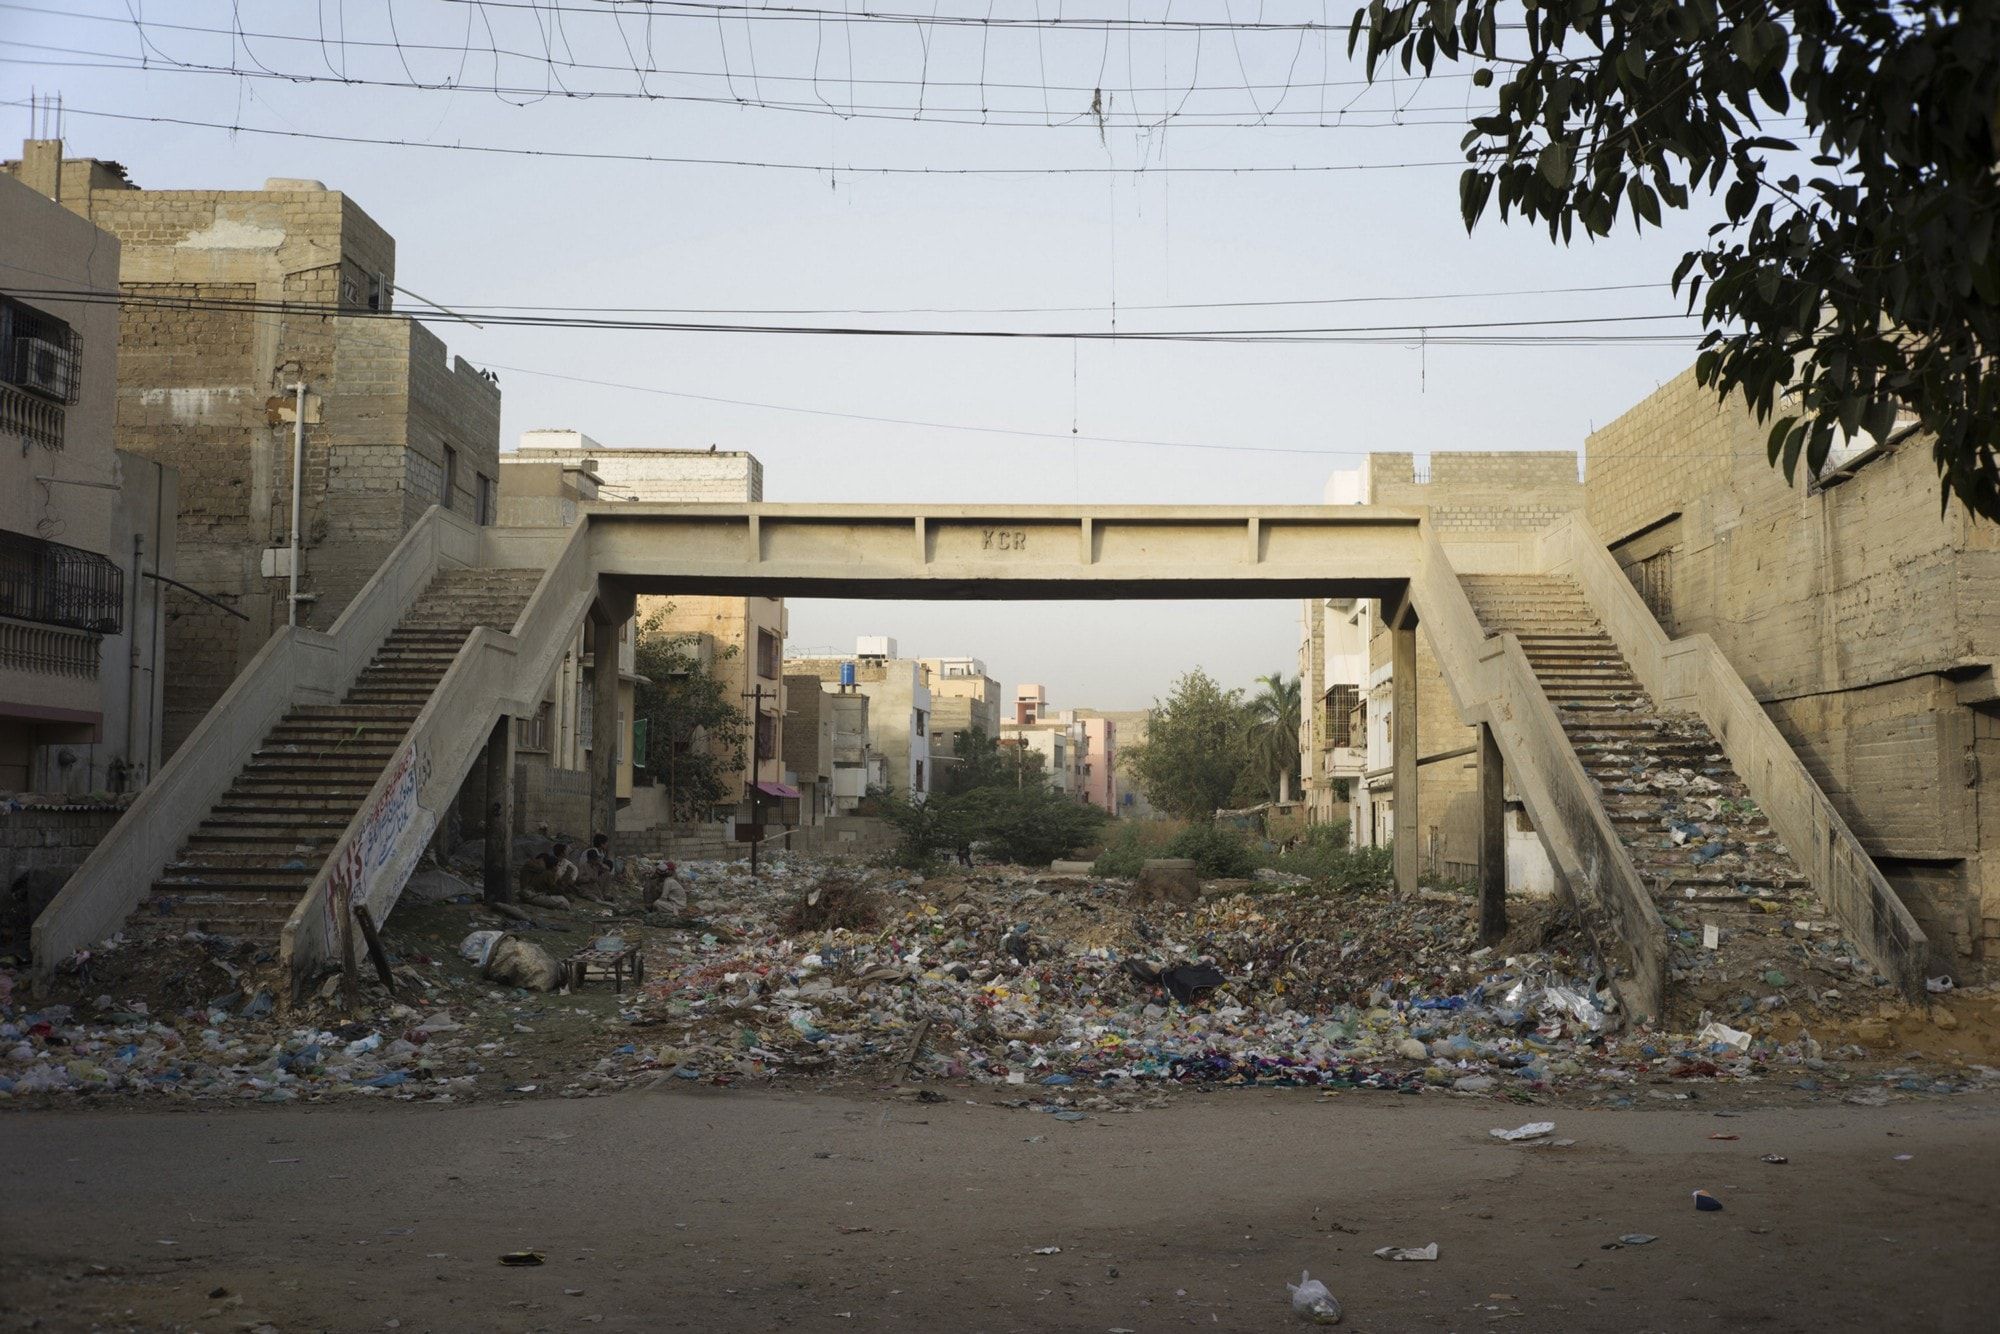 Informal housing, Footbridge near Orangi Town Station, Karachi, Pakistan. Still from KCR, 2014–2017, nine-channel multimedia installation. Image by Ivan Sigal. Pakistan, 2017.